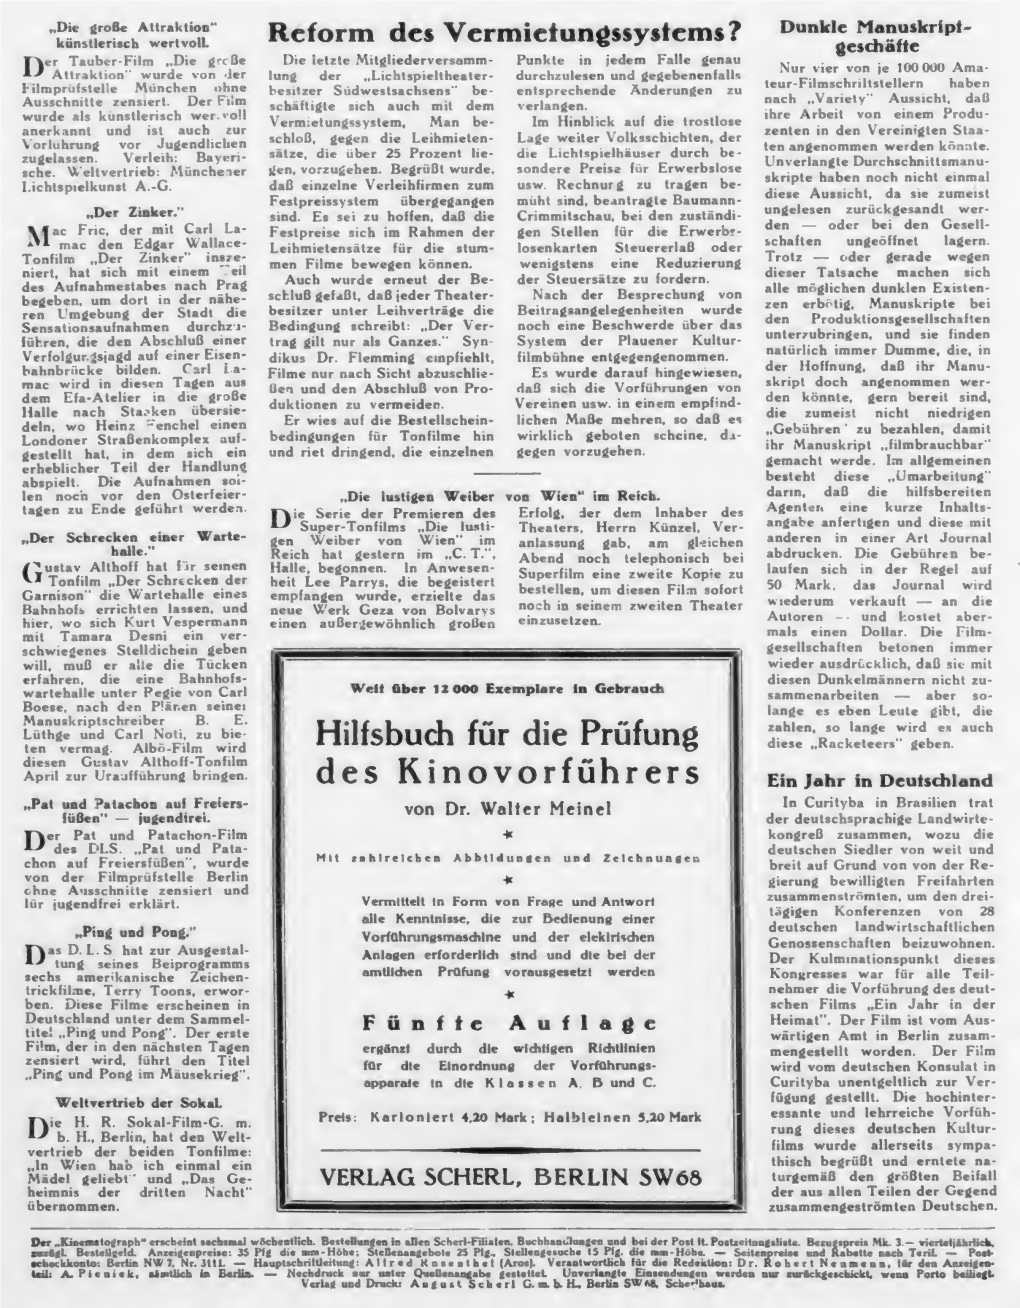 Der Kinematograph (April 1931)